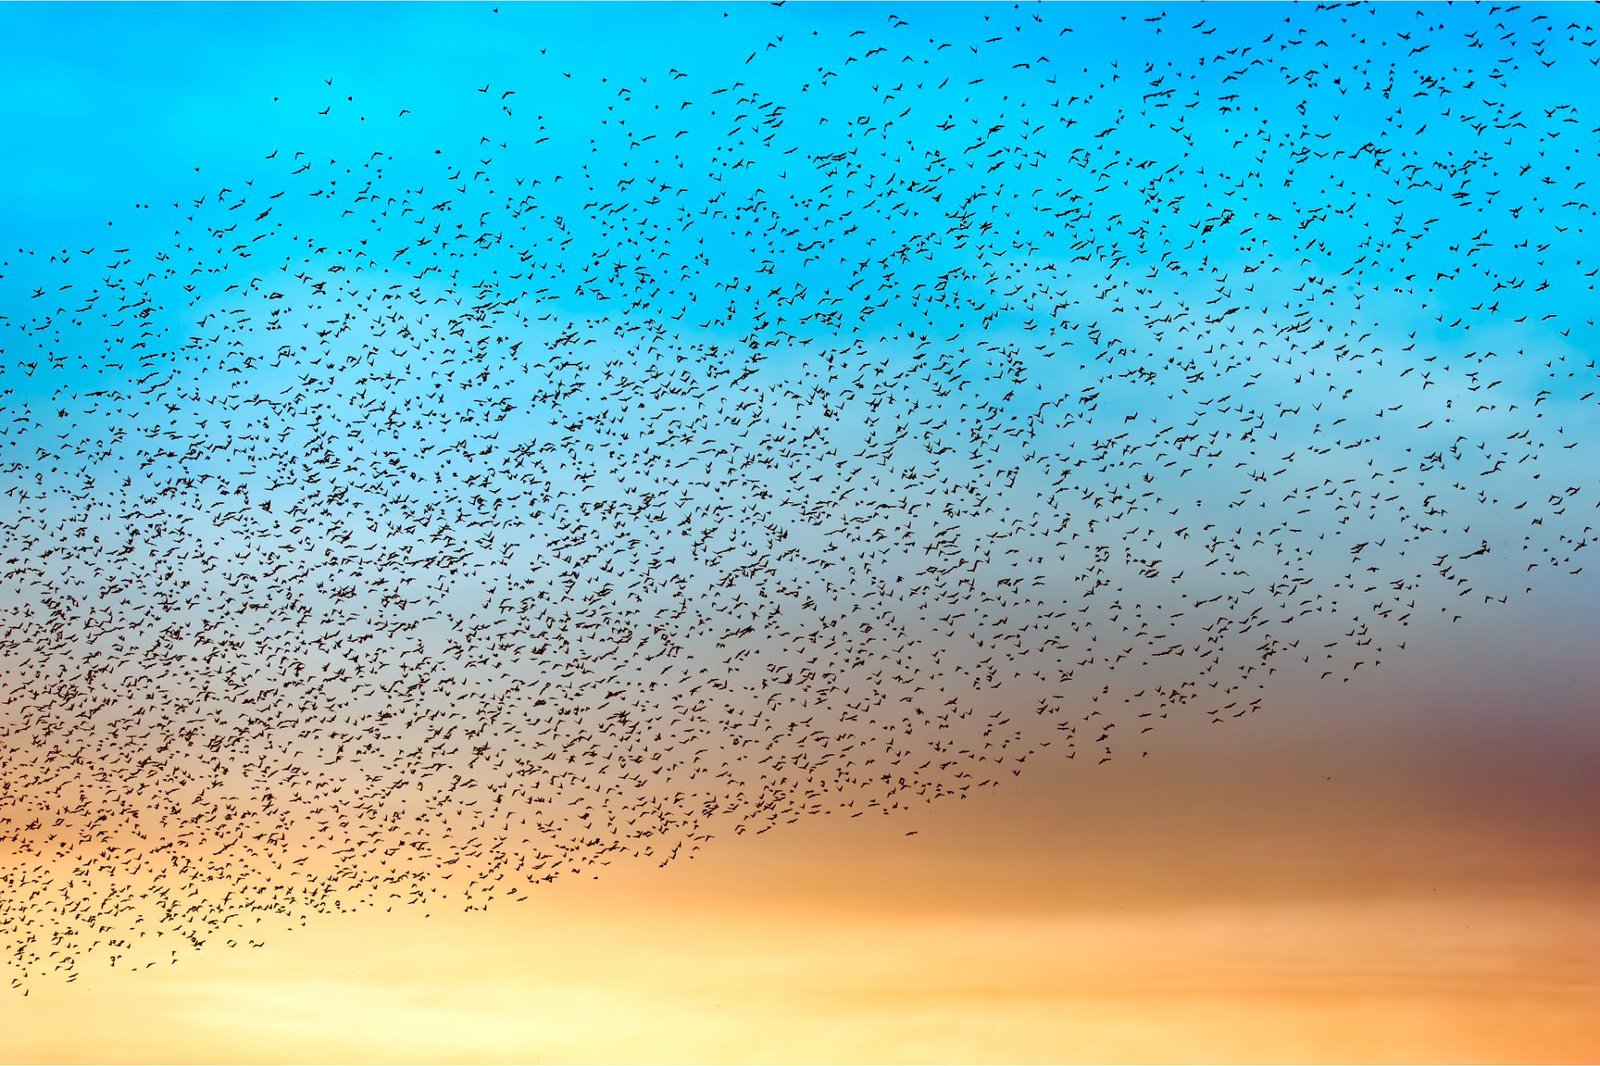 How Do Birds Flock? Researchers Reveal Previously Unknown Aerodynamic Phenomenon